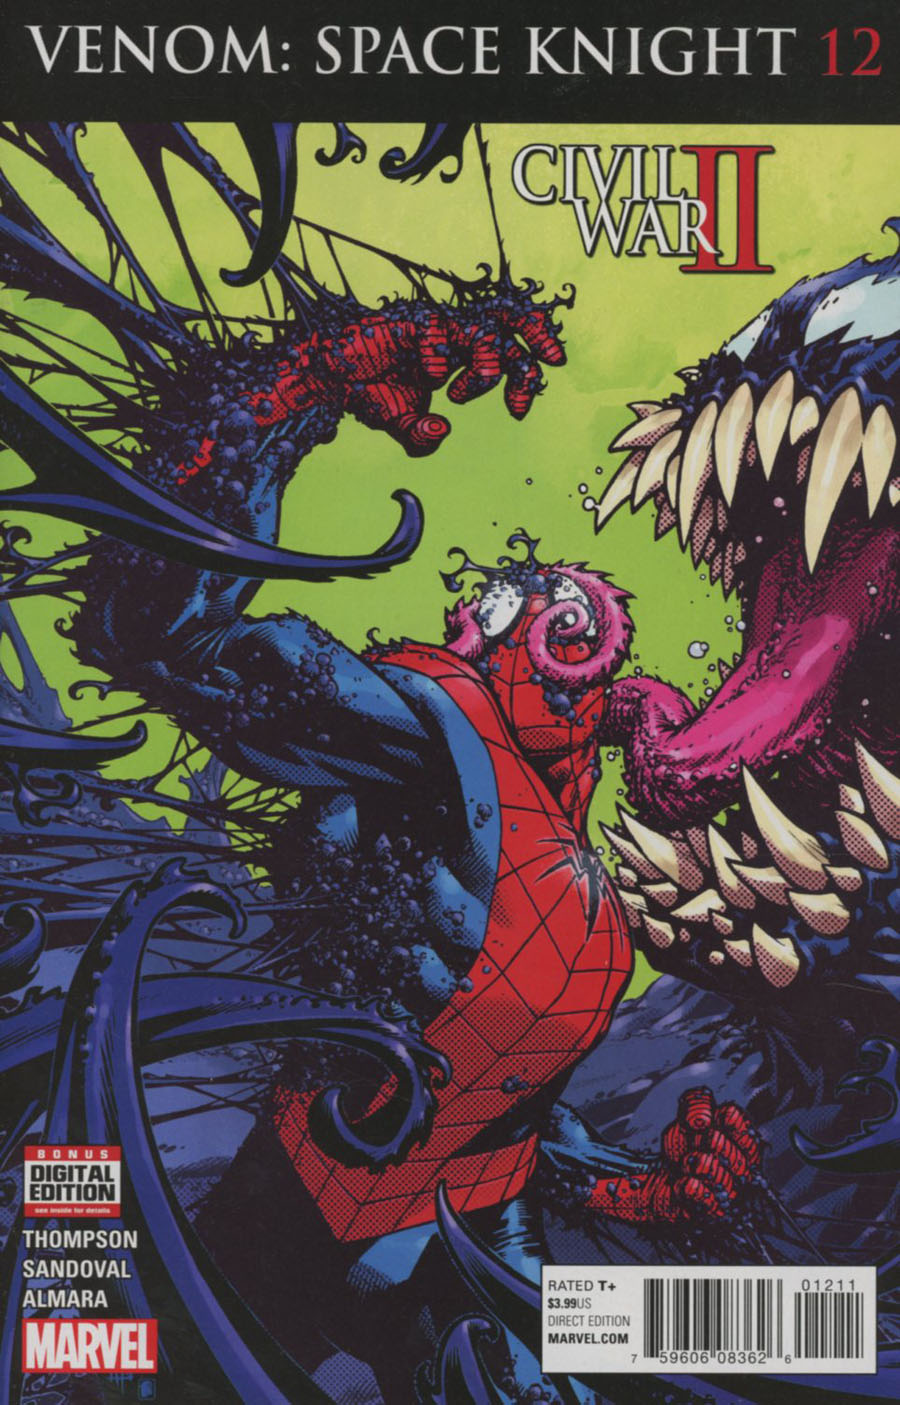 Venom Space Knight #12 (Civil War II Tie-In)